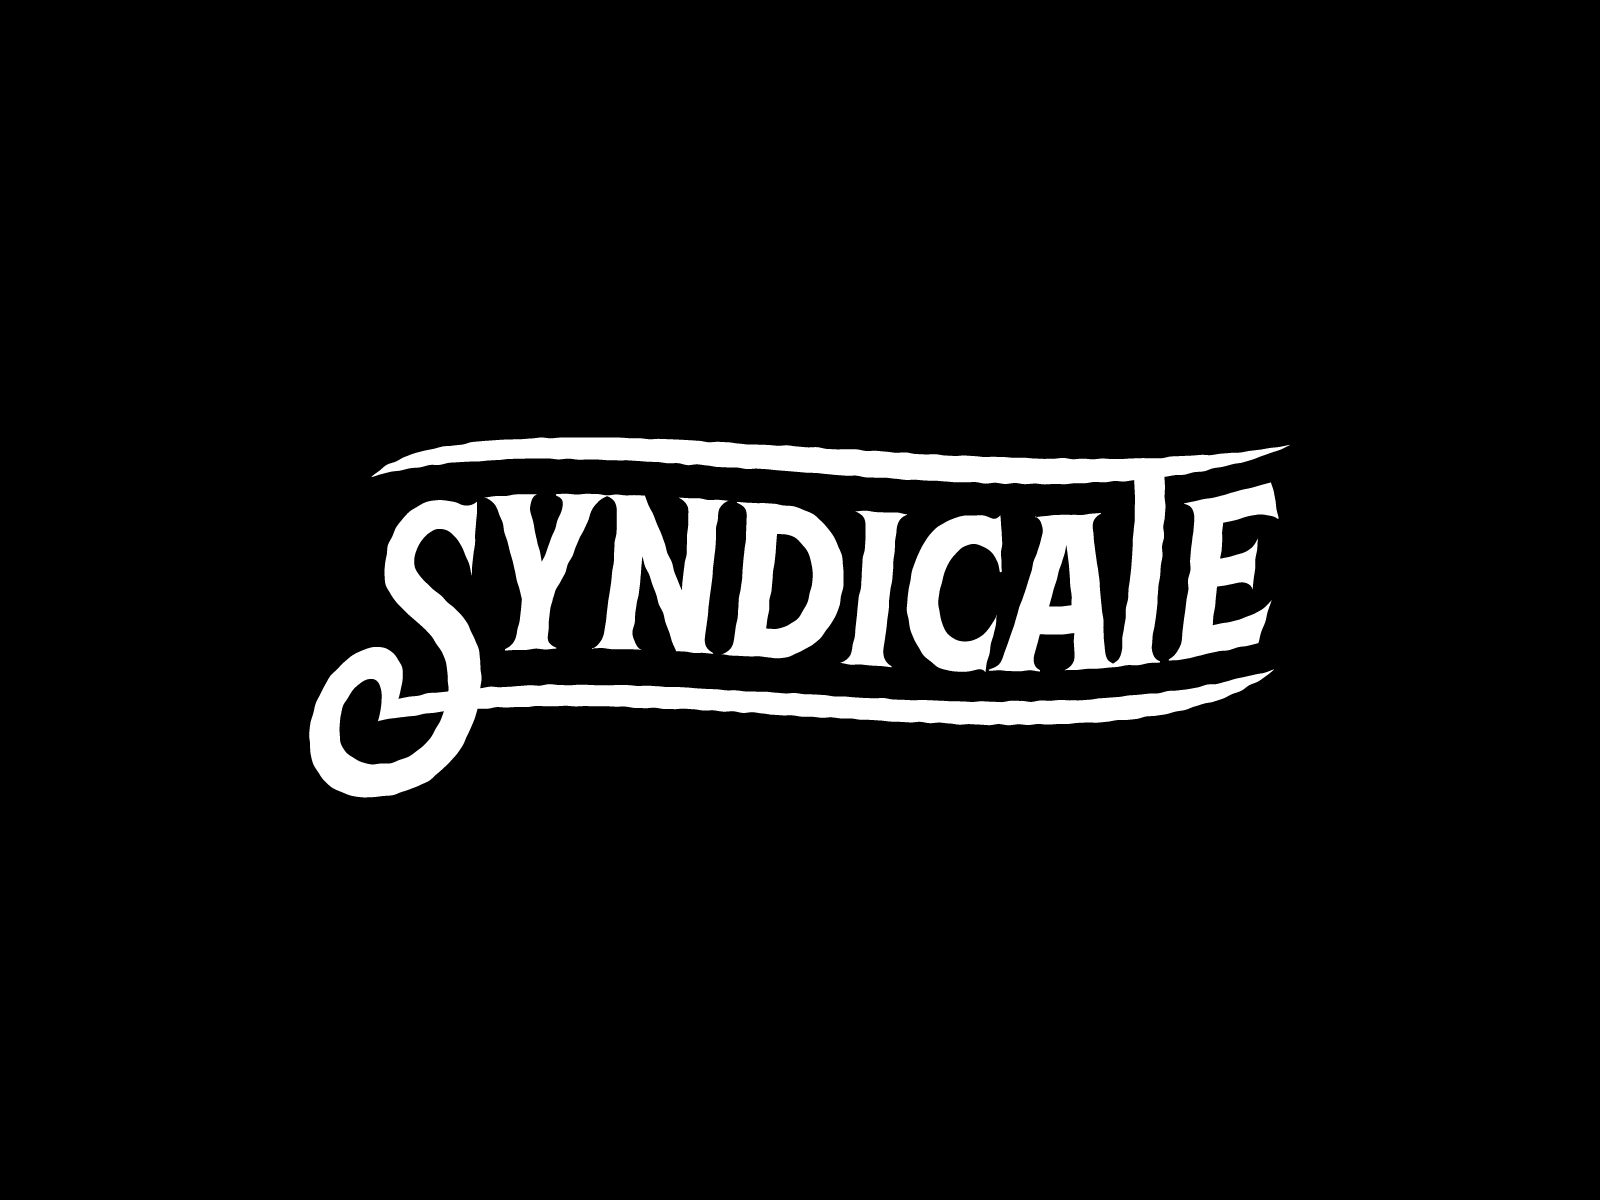 Vans Syndicate - Vans Syndicate Logo Transparent PNG - 800x800 - Free  Download on NicePNG